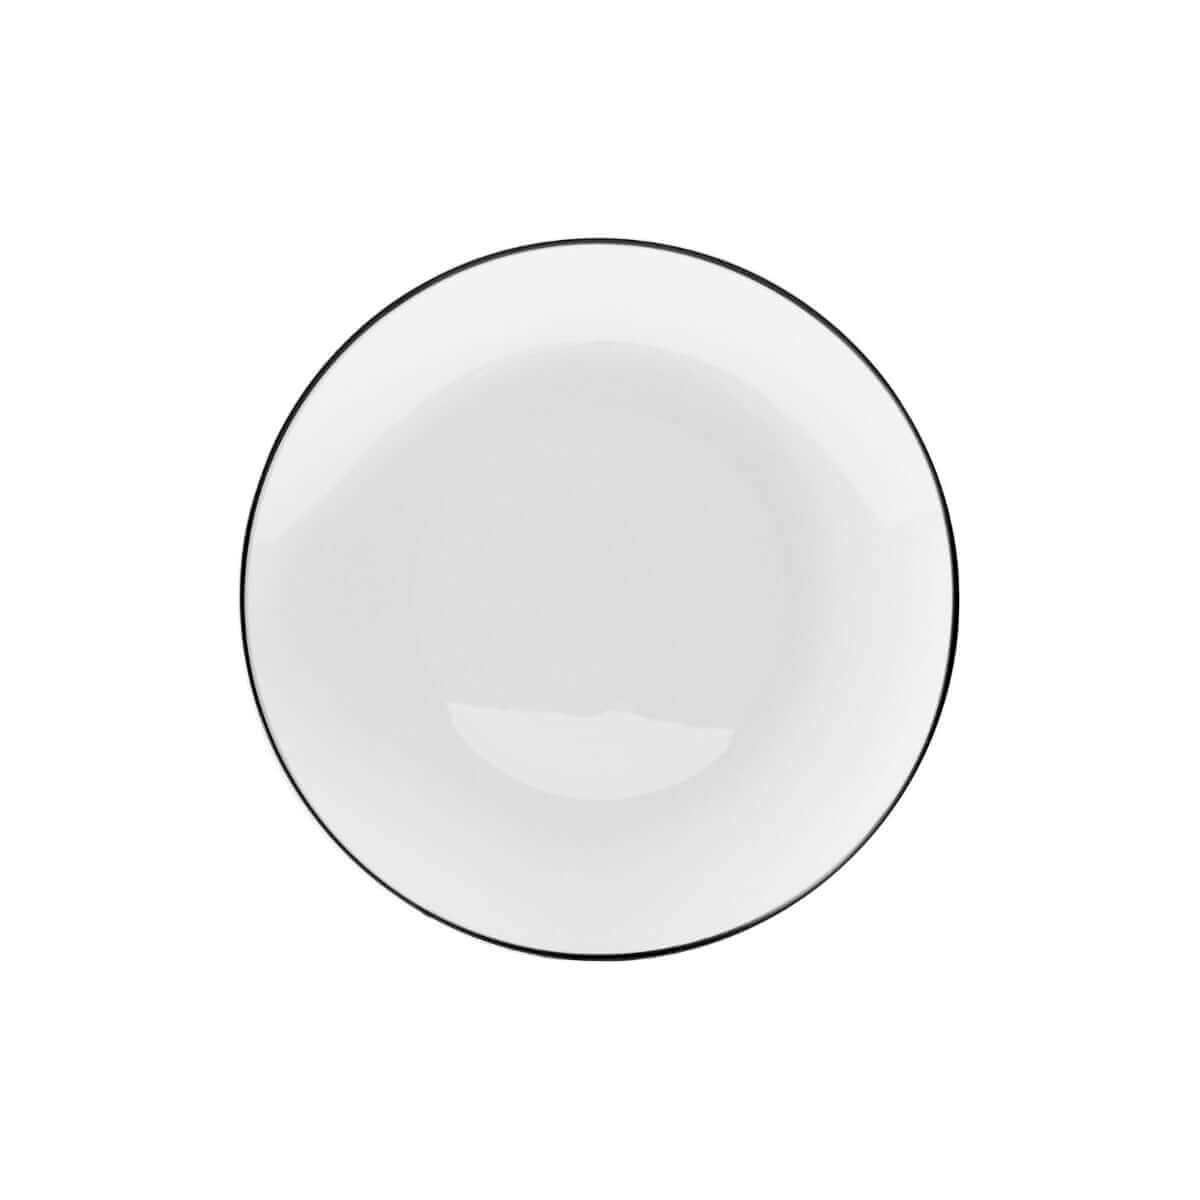 8" White & Black Rim Design Plastic Plates (40 Count) - Yom Tov Settings